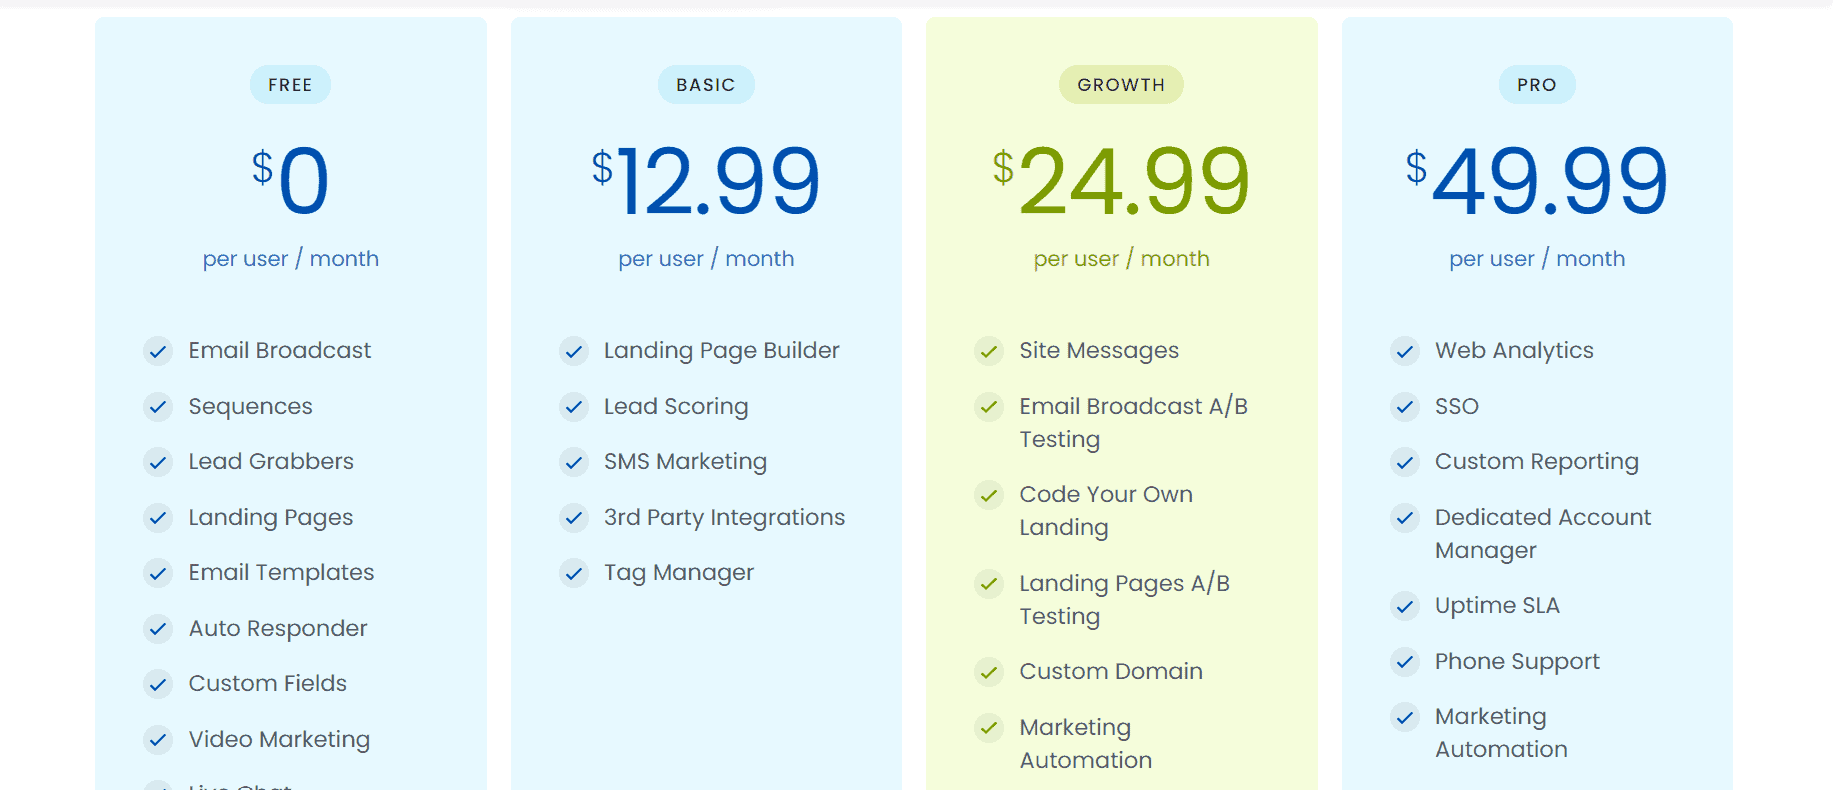 engagebay pricing SharpSpring pricing comparison